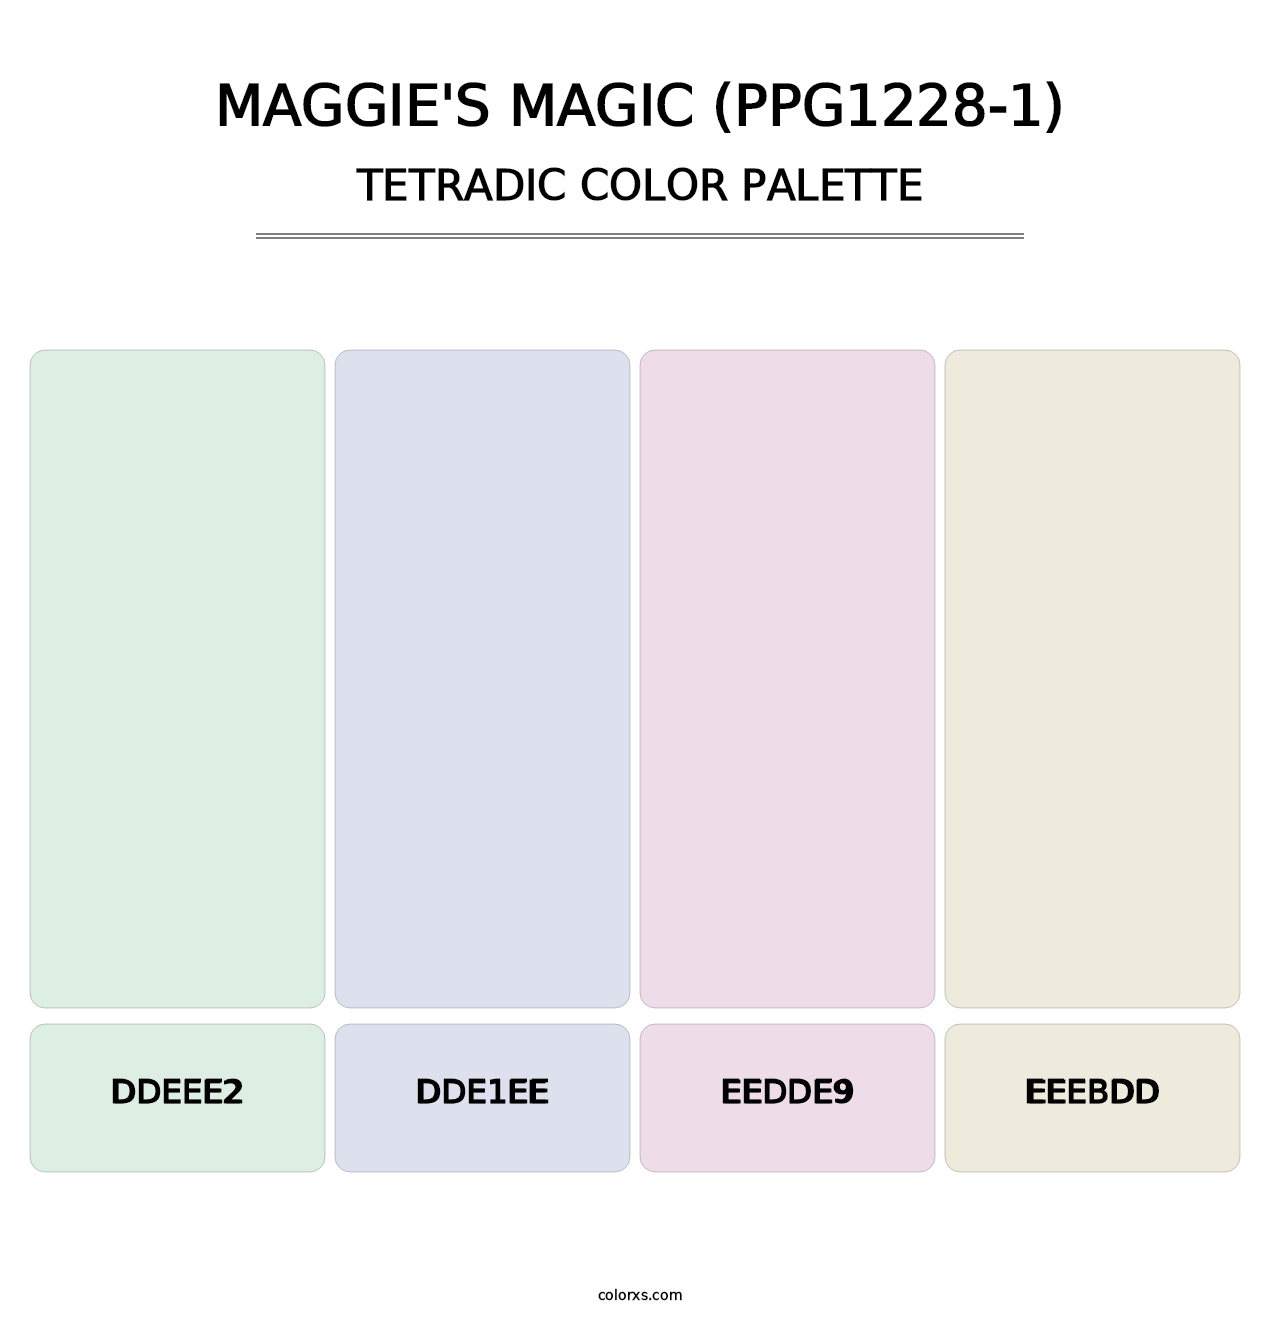 Maggie's Magic (PPG1228-1) - Tetradic Color Palette